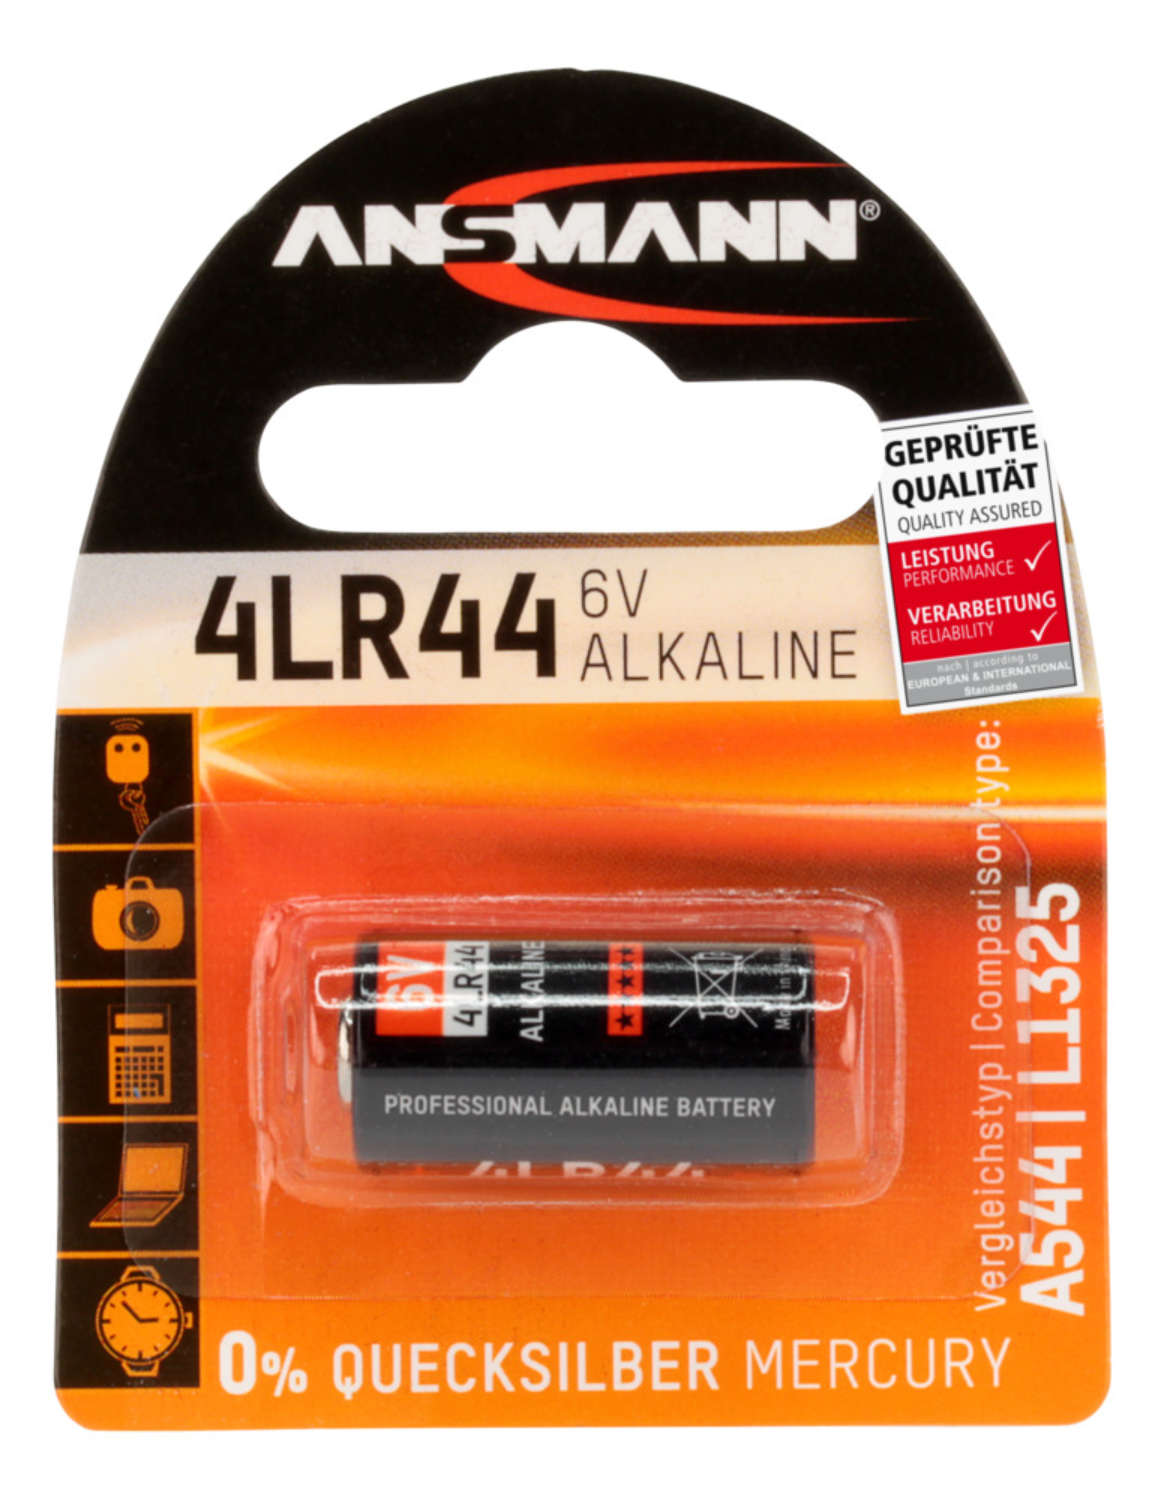 Ansmann   PX28 / A544 / 4LR44 6V ALKALINE